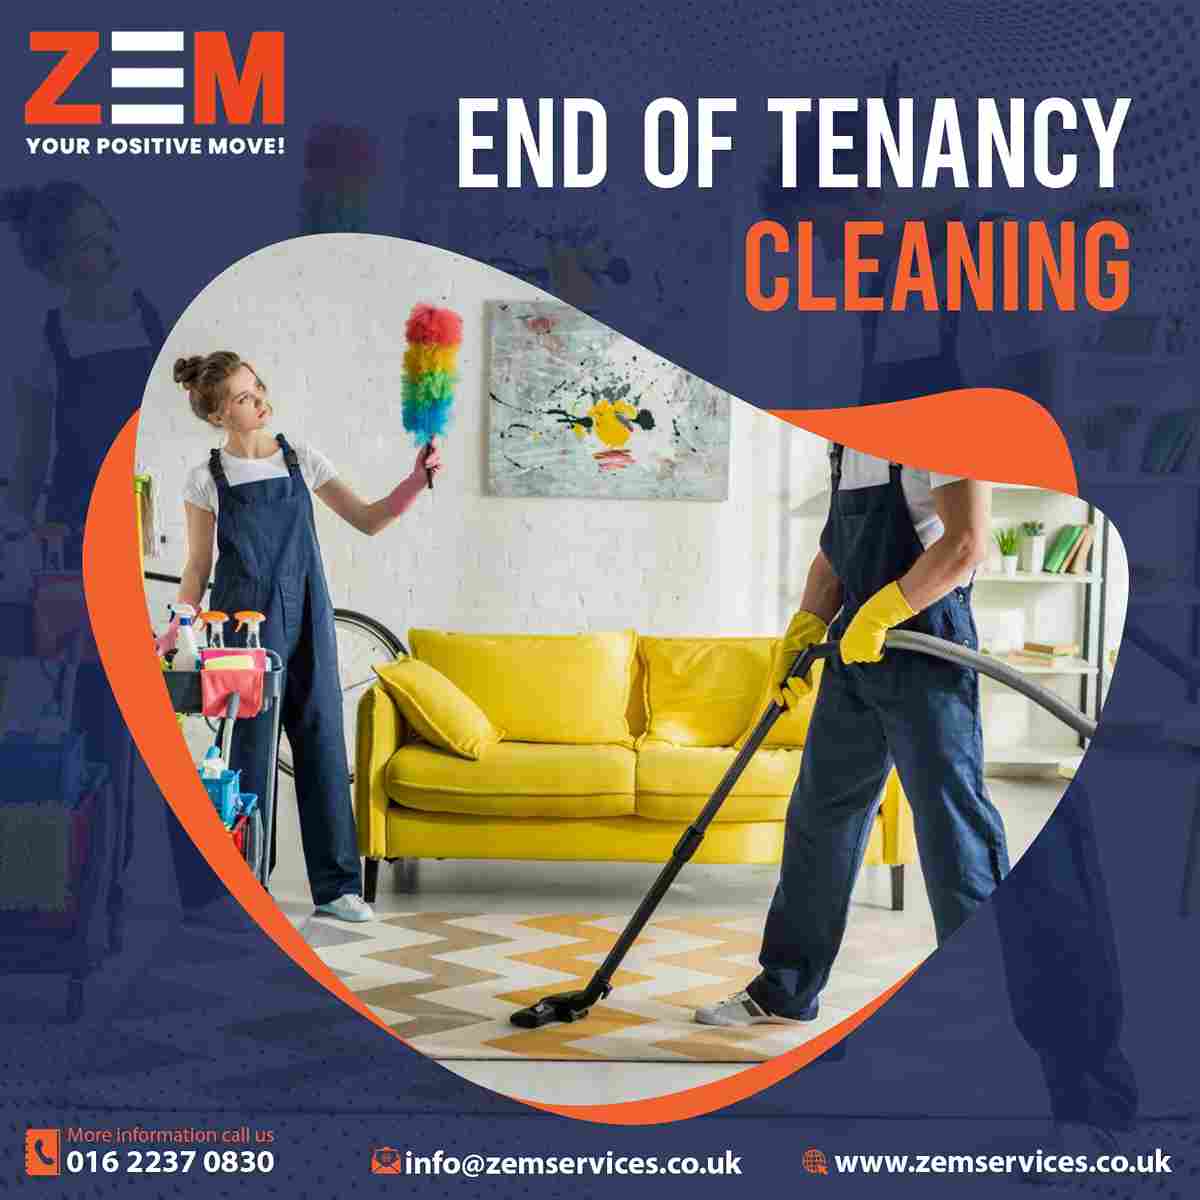 Zem End of Tenancy Cleaning